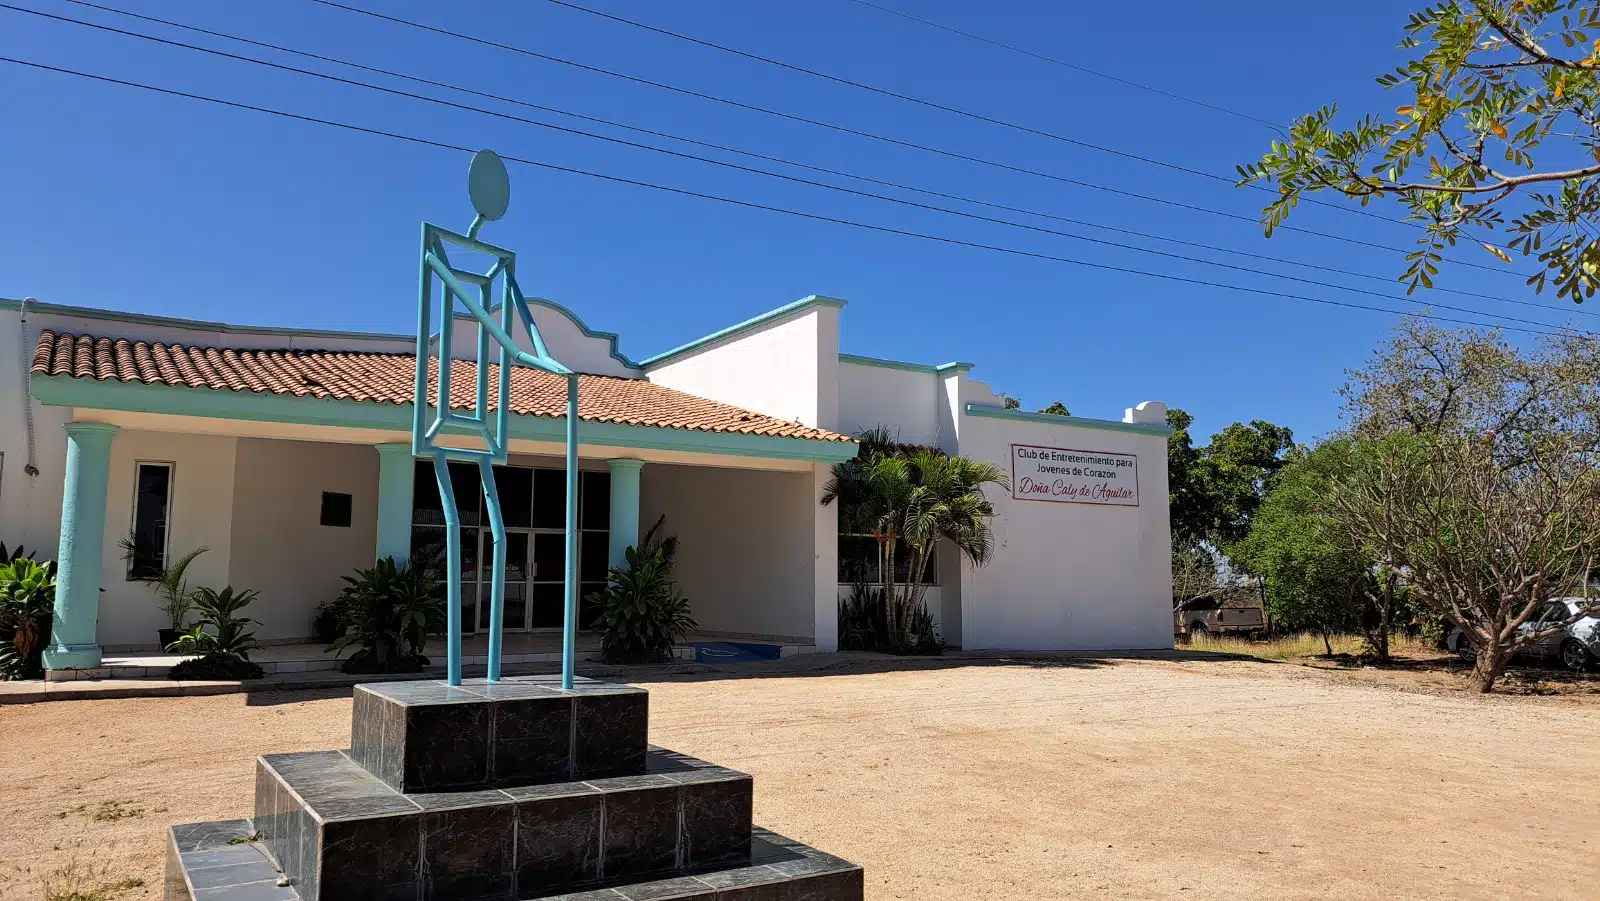 Casa de cuidados diurnos para adultos mayores Doña Kaly de Aguilar